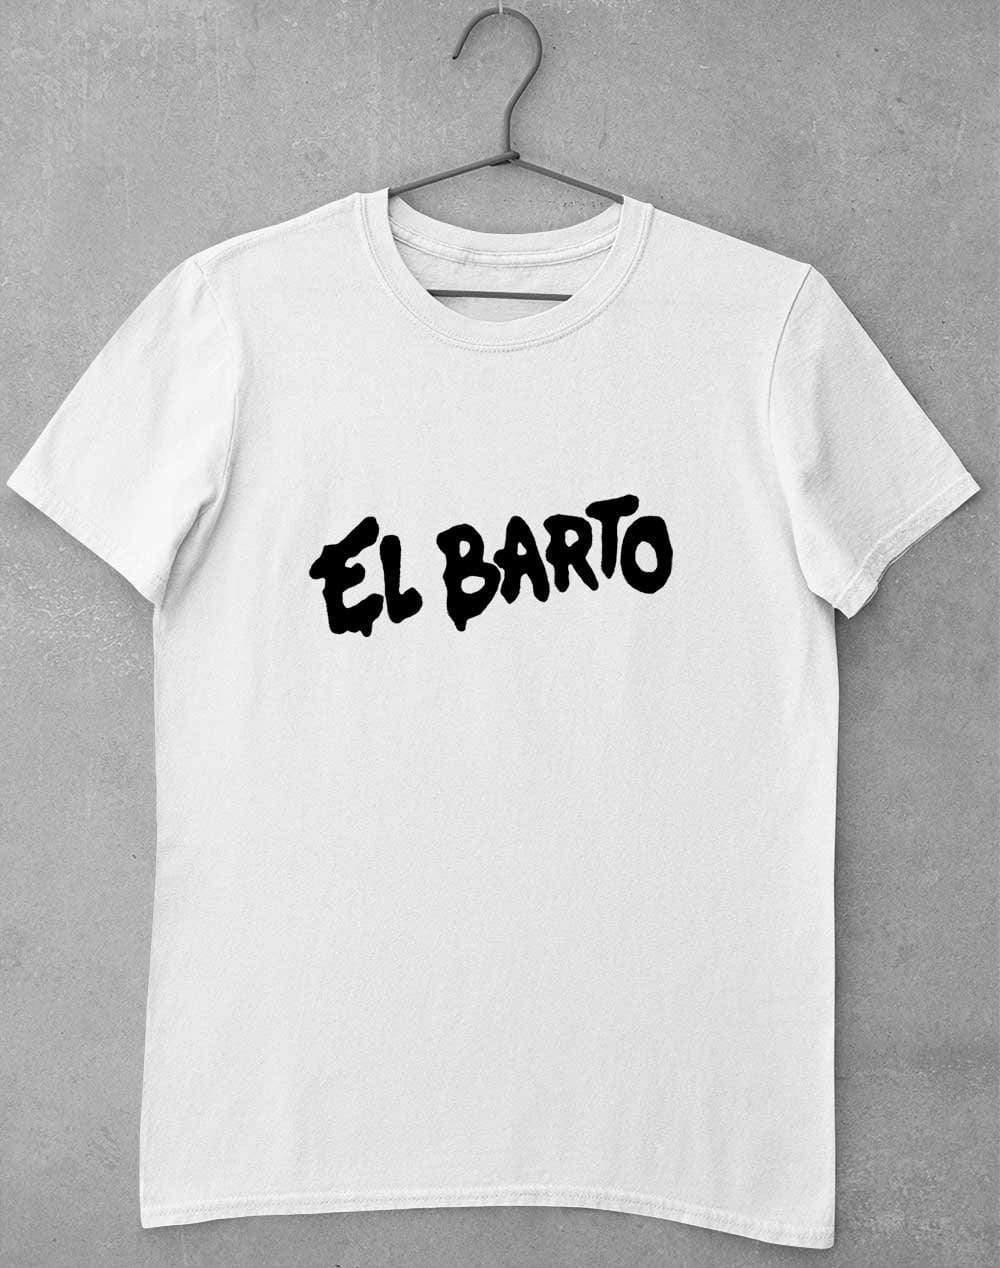 El Barto Tag T-Shirt S / White  - Off World Tees